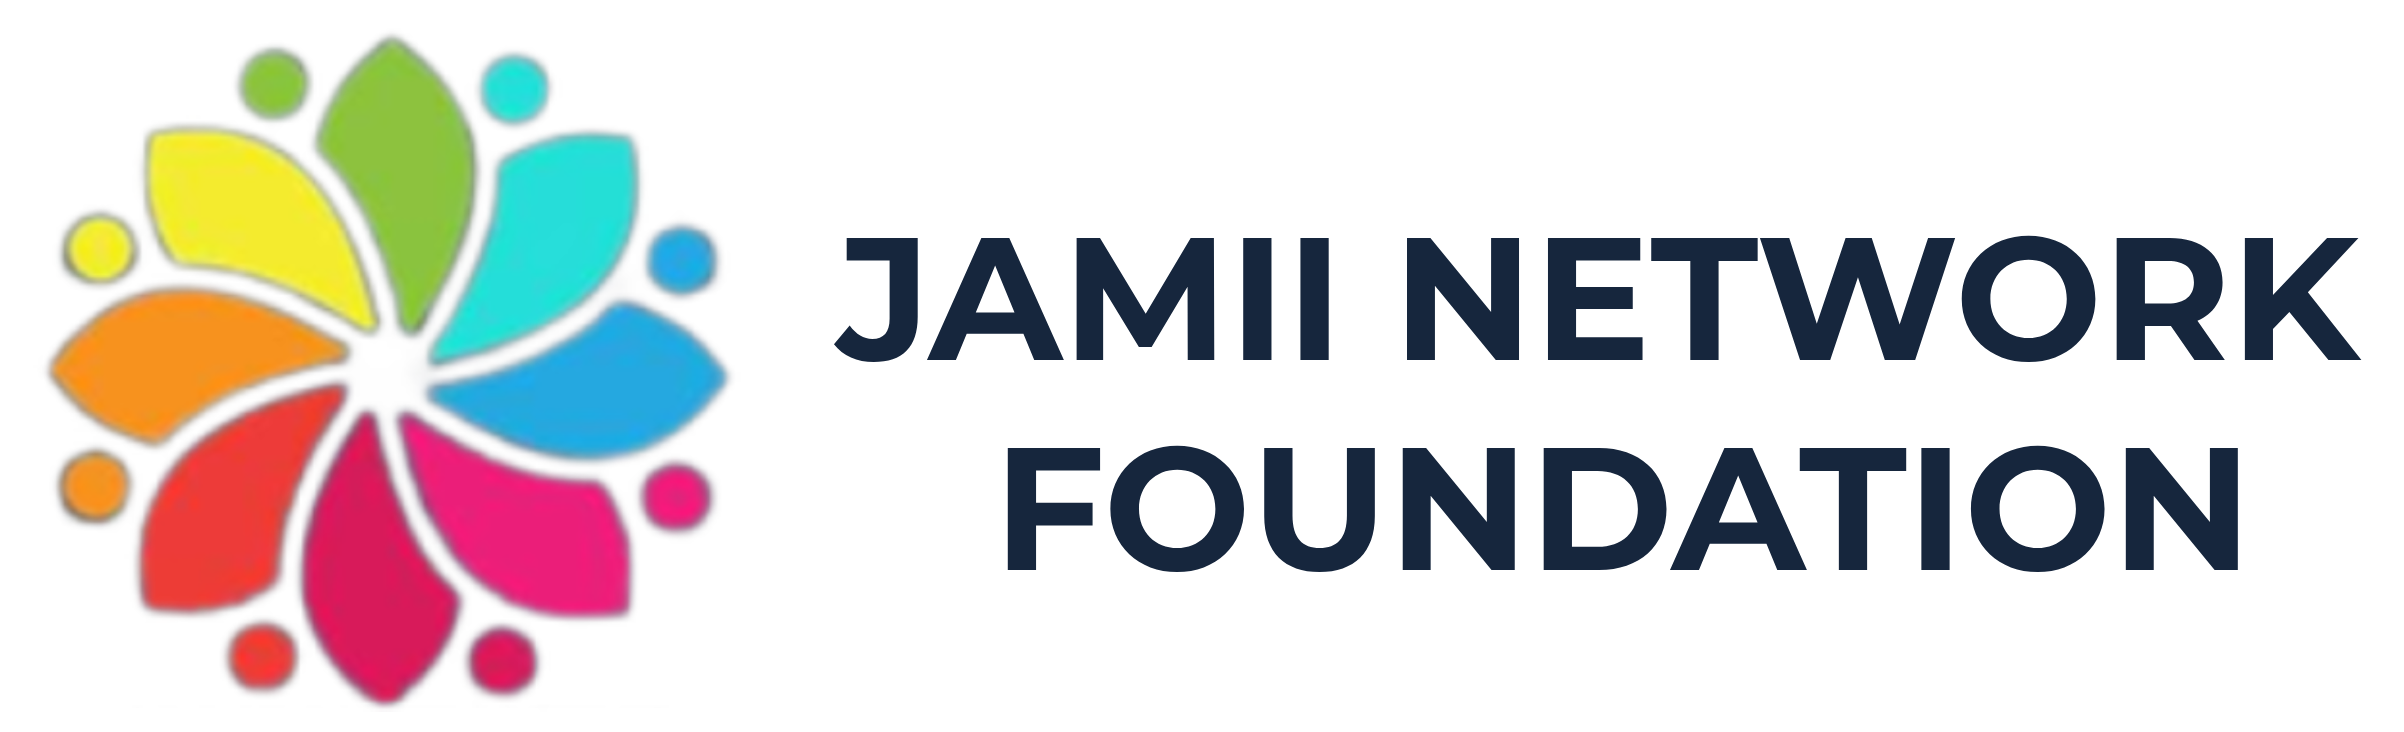 Jamii Network Foundation